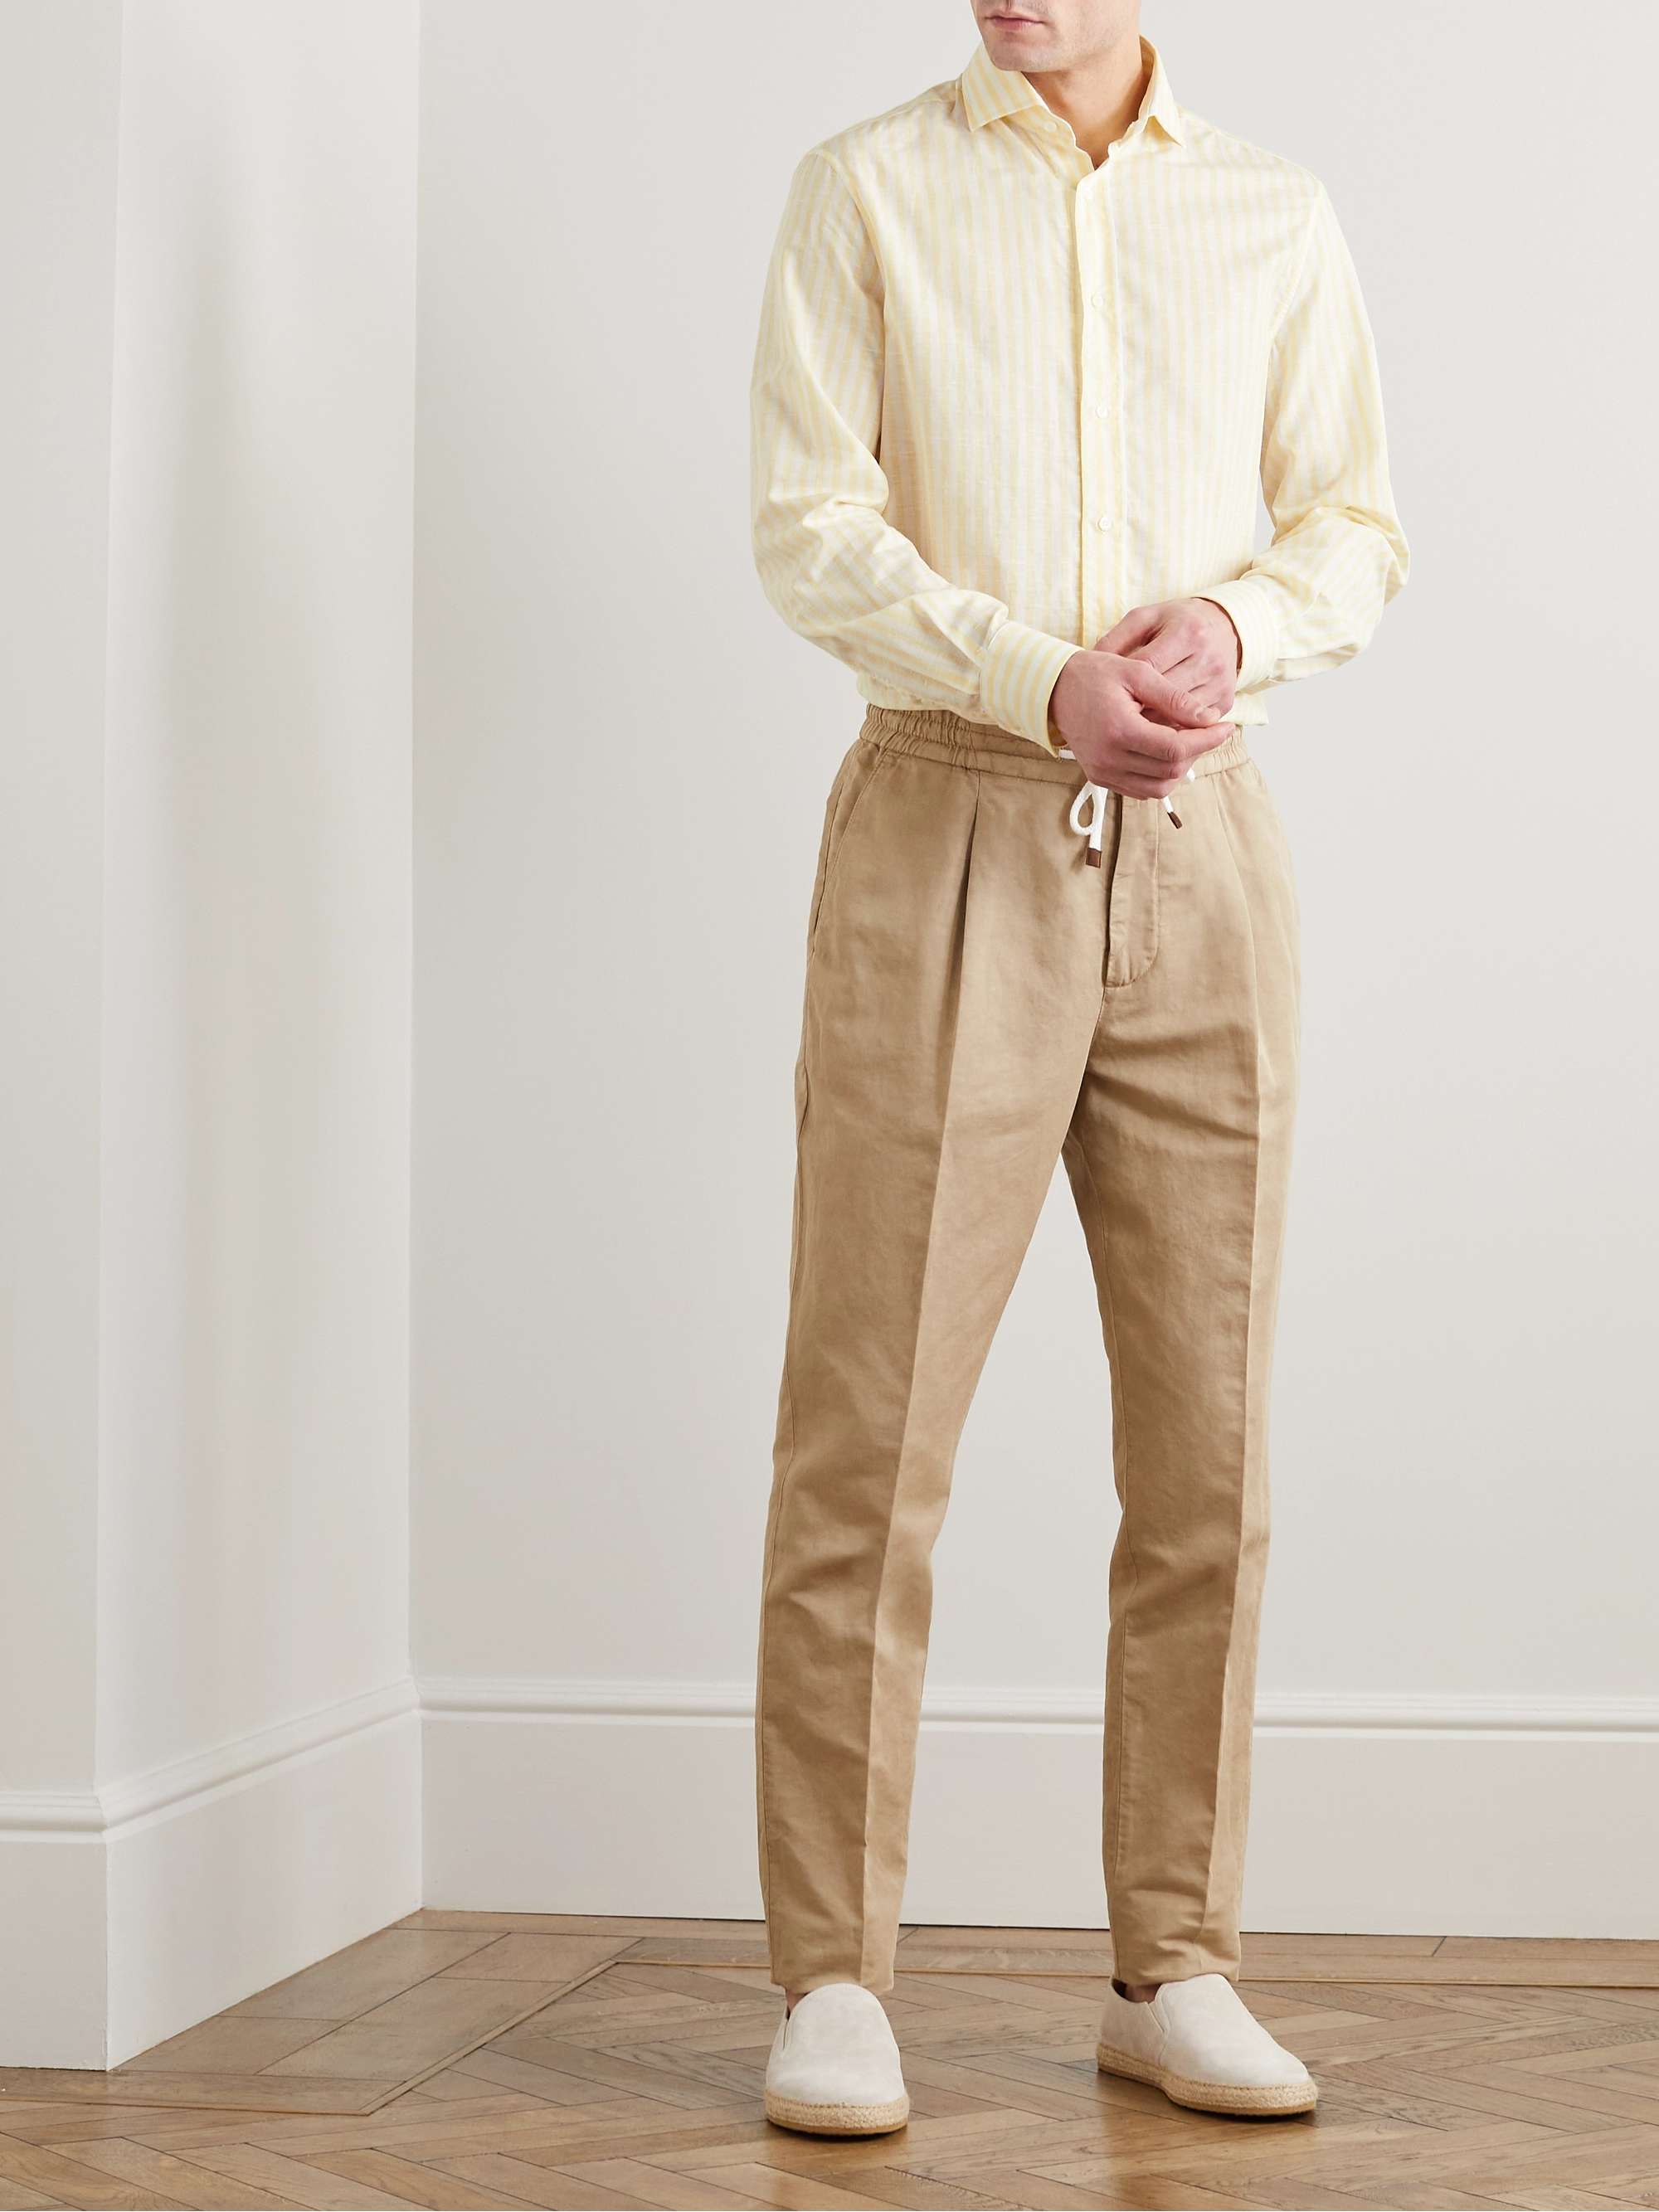 BRUNELLO CUCINELLI Striped Cotton and Linen-Blend Shirt for Men | MR PORTER